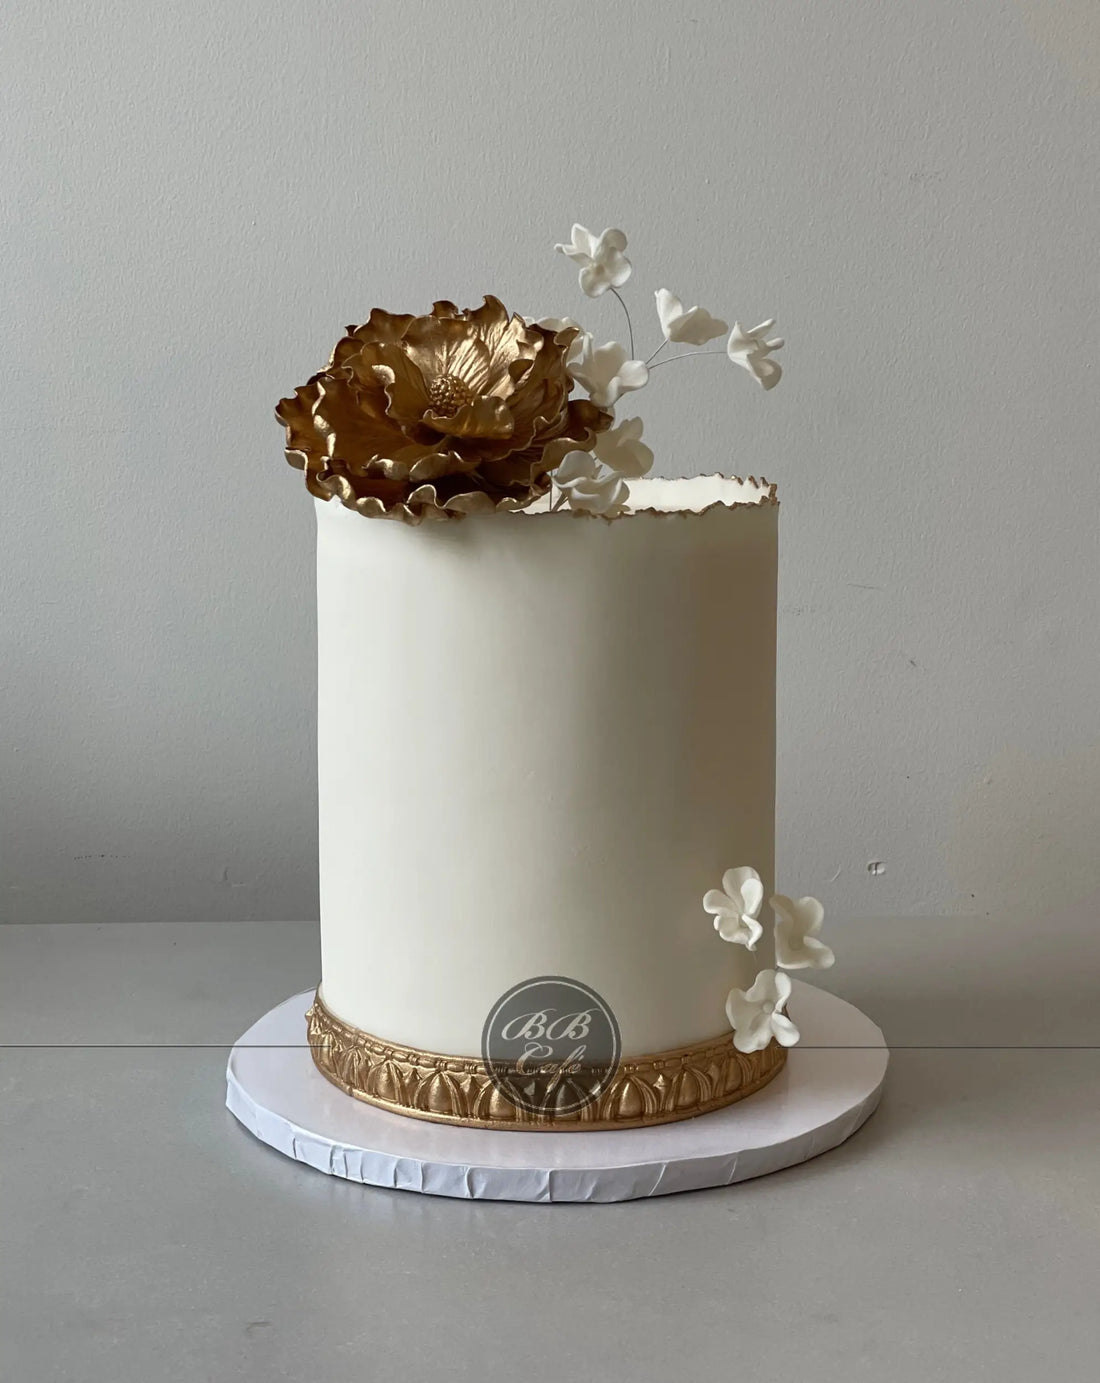 Sugar flower on deckled edge fondant - custom cake